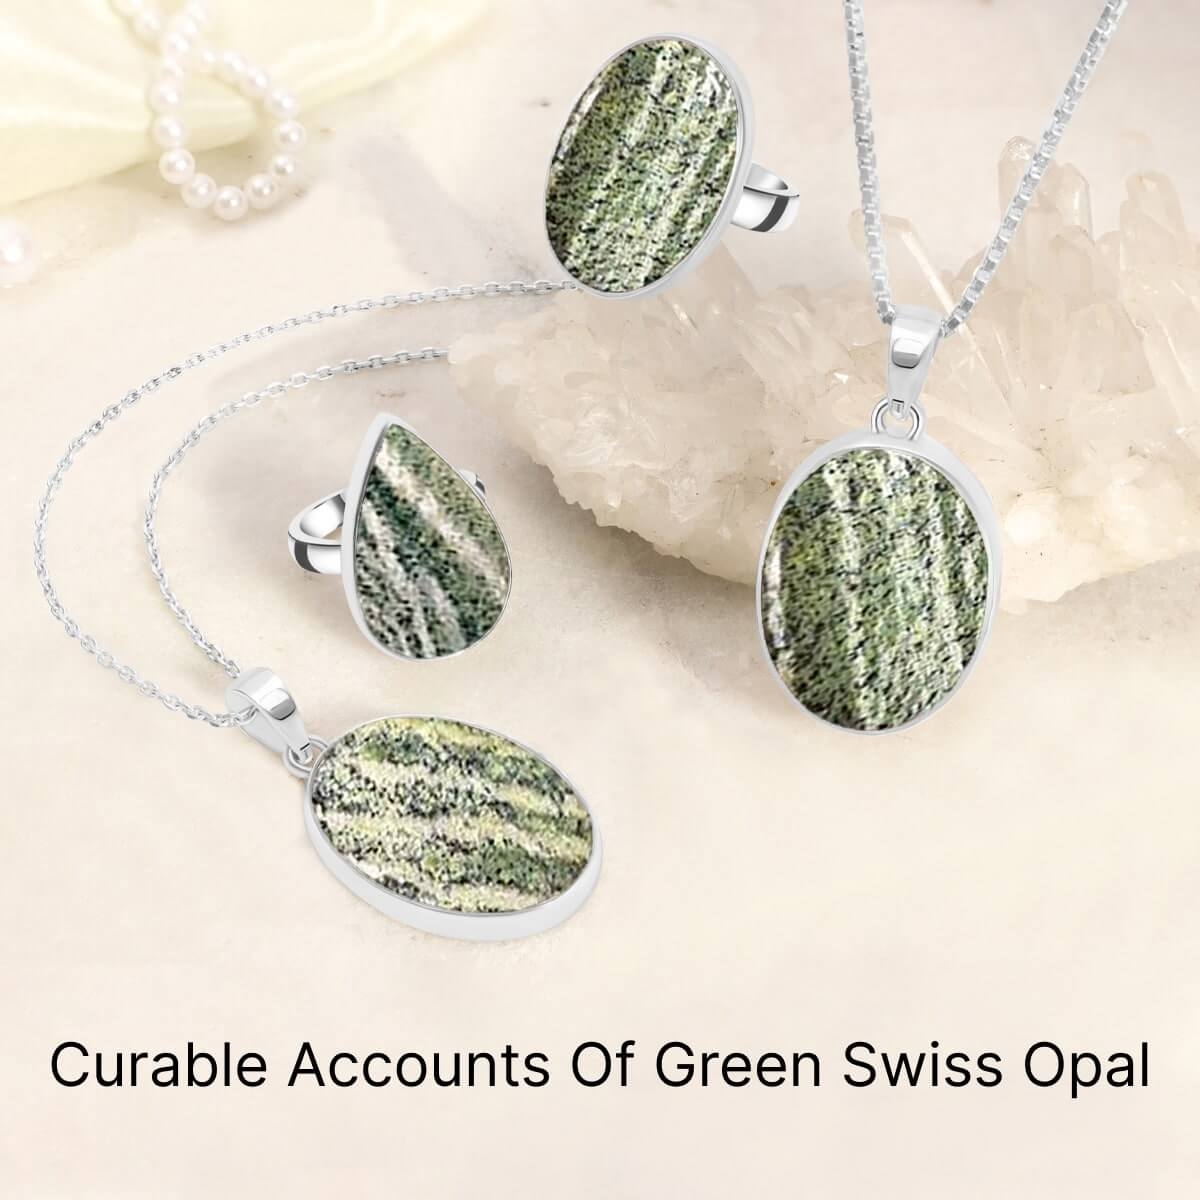 Healing Properties of Green Swiss Opal